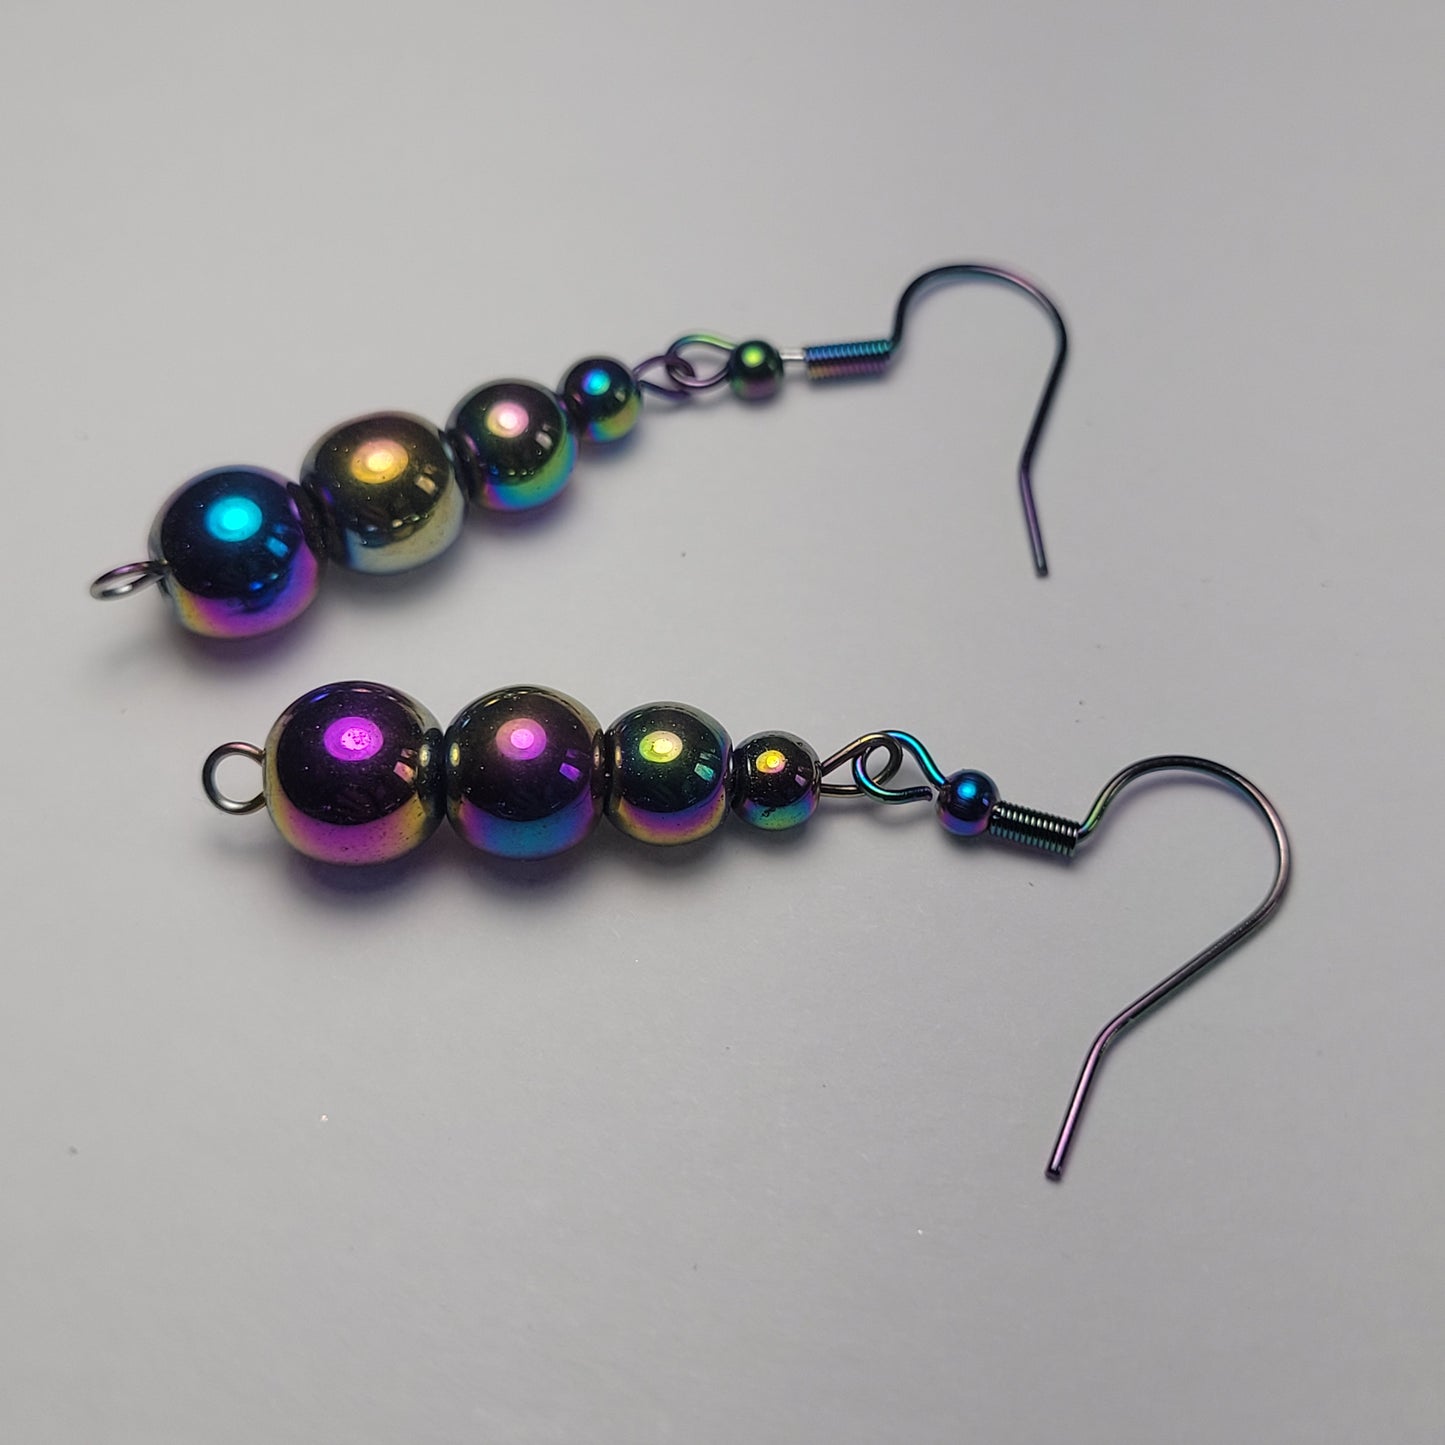 Earrings, multichrome rainbow bead